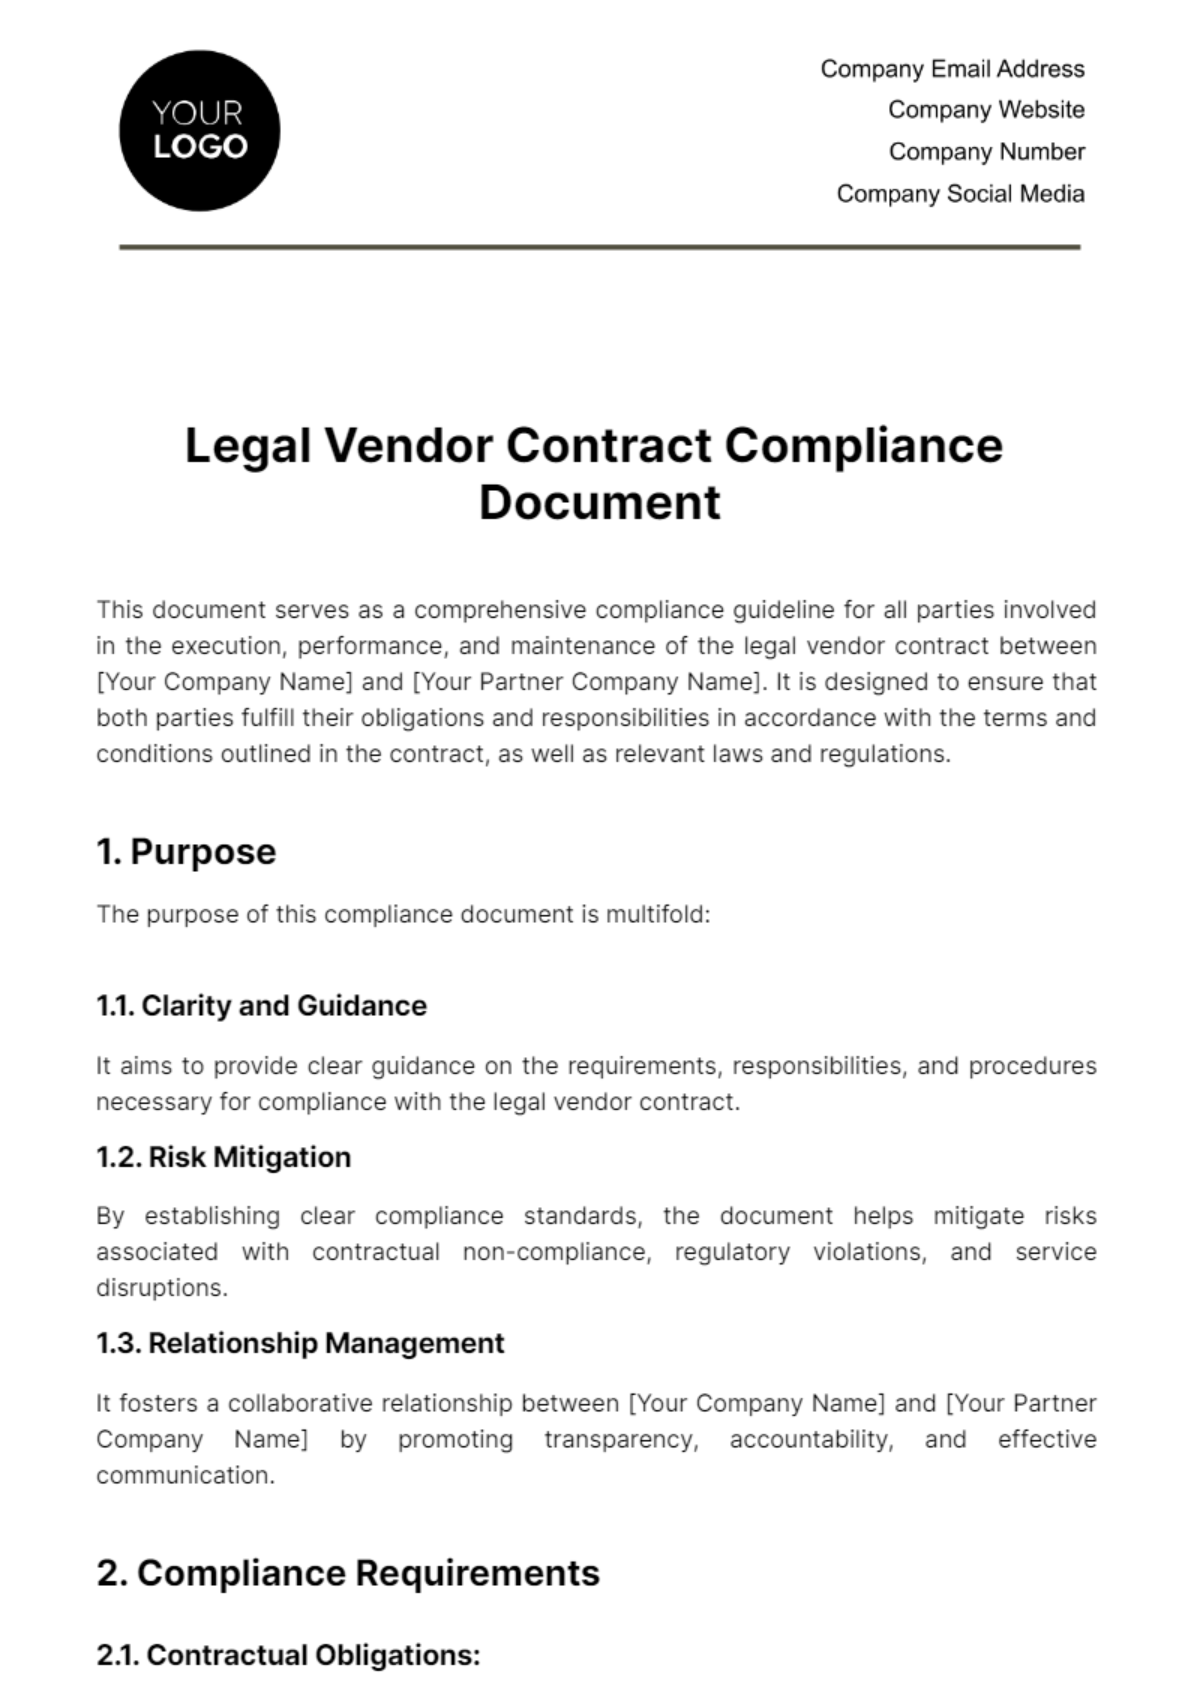 Legal Vendor Contract Compliance Document Template